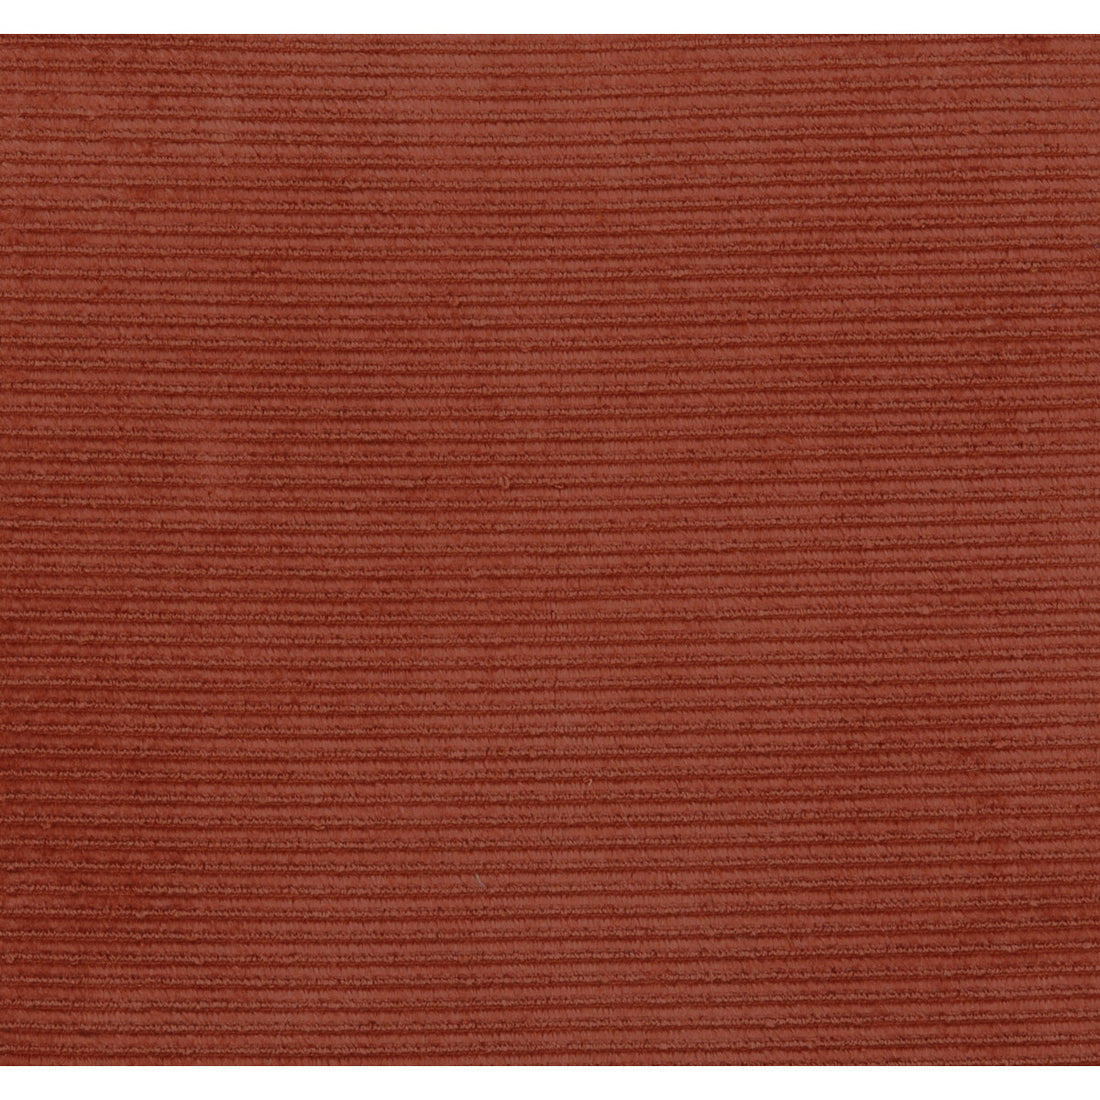 Mozart Velvet fabric in coq de ro color - pattern BR-81112.Q.0 - by Brunschwig &amp; Fils